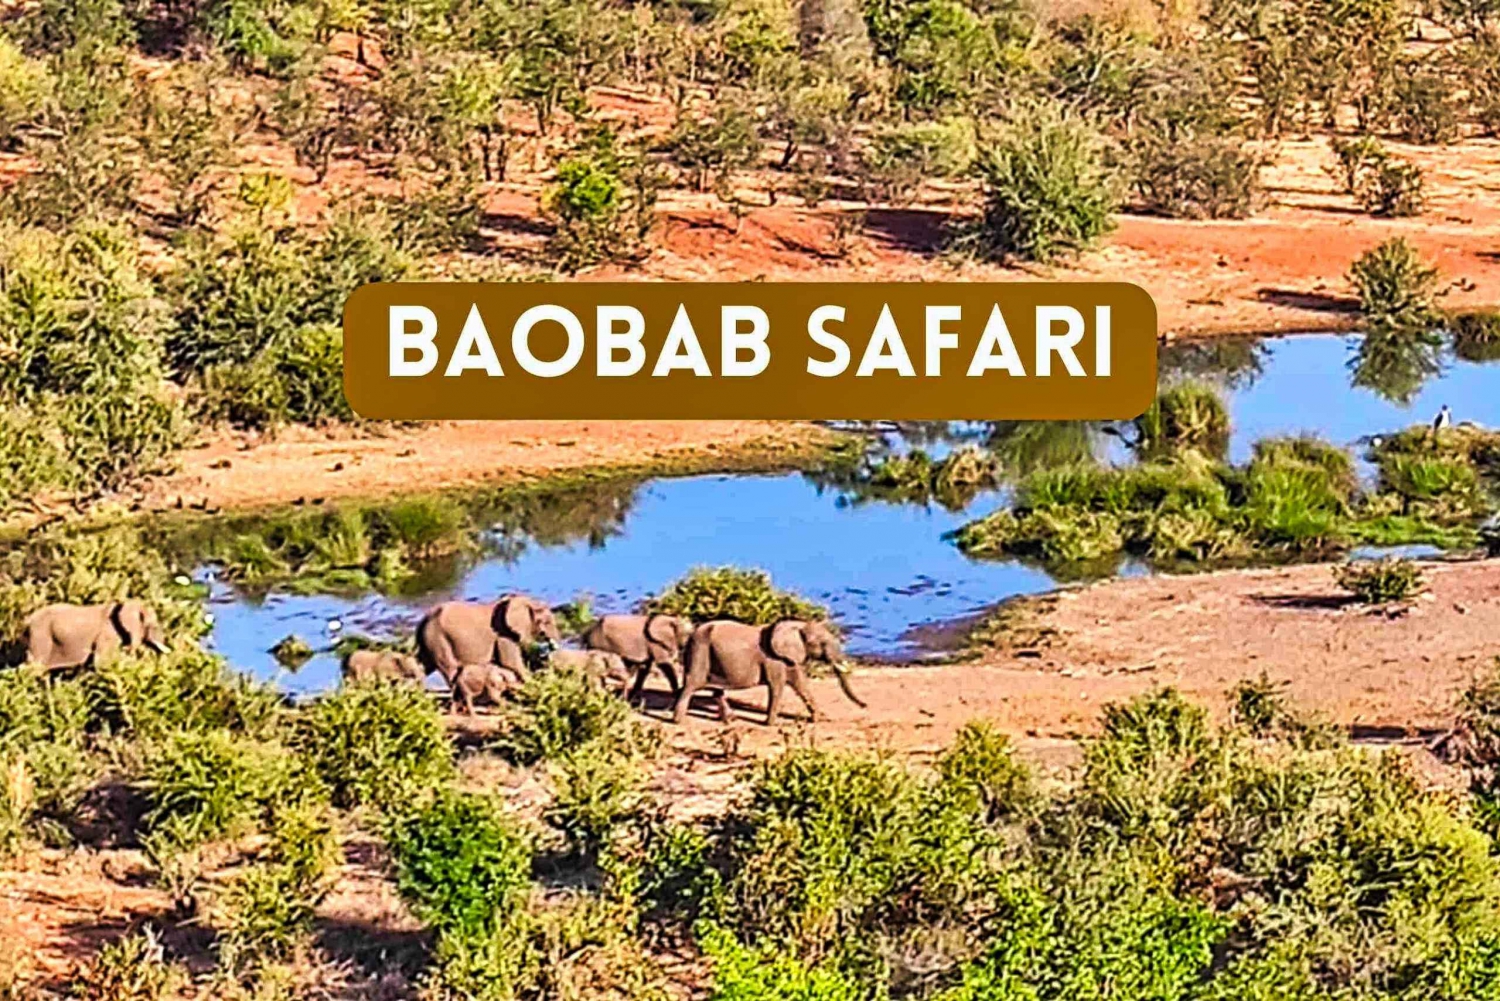 Victoria Falls: 4x4 Baobab Safari in National Park